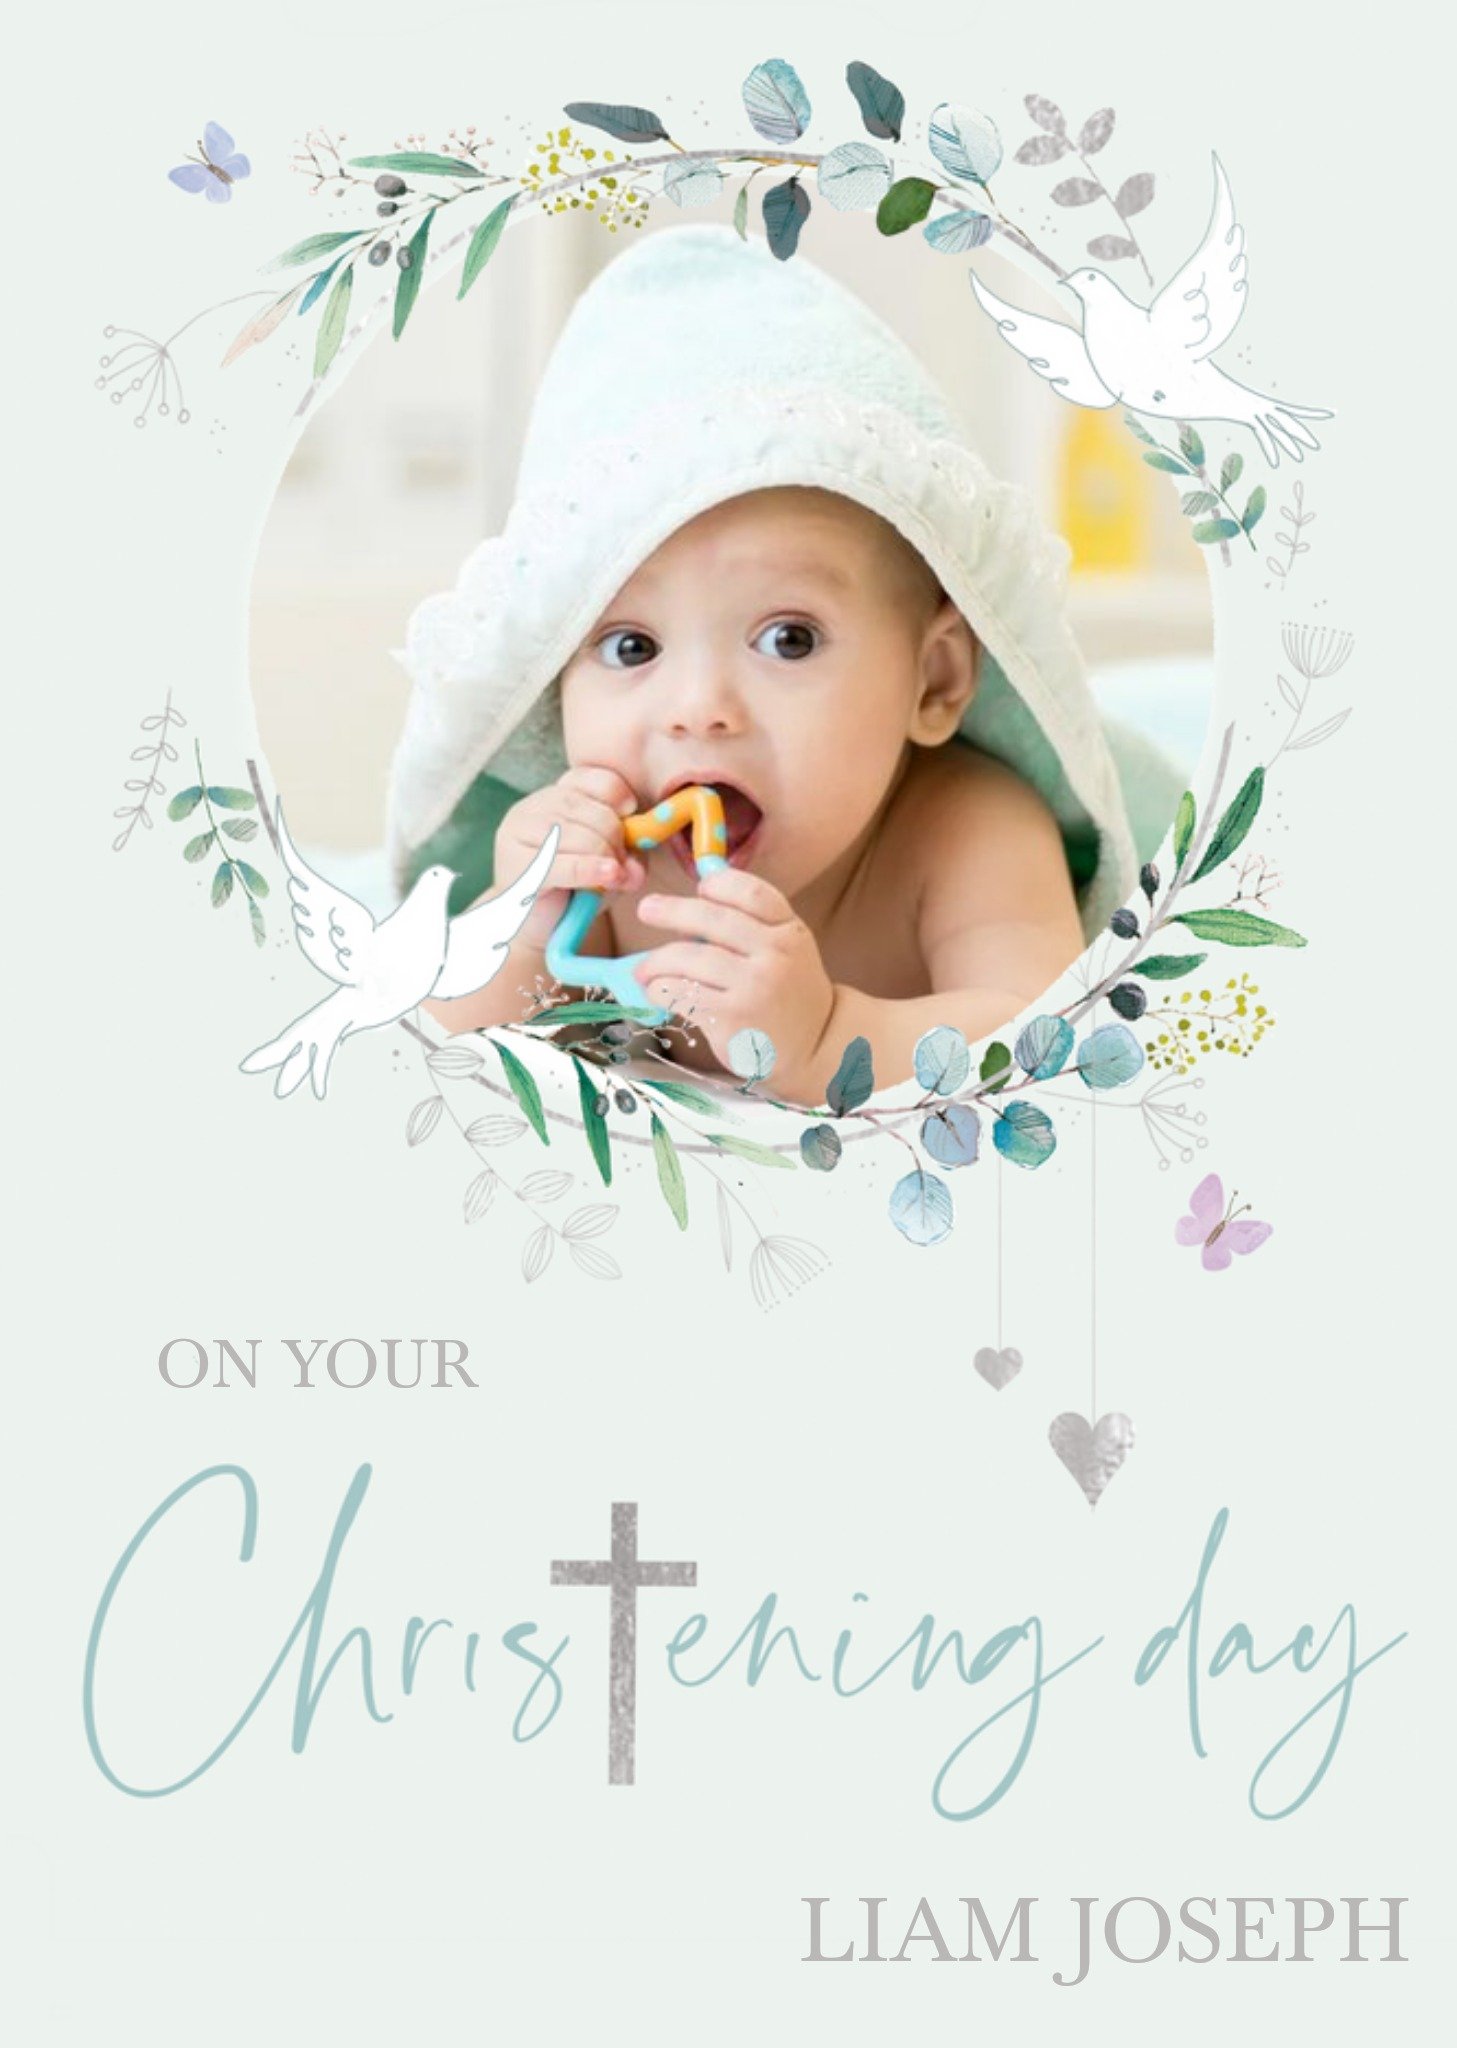 Ling Design Christening Doves Photo Upload Card Ecard